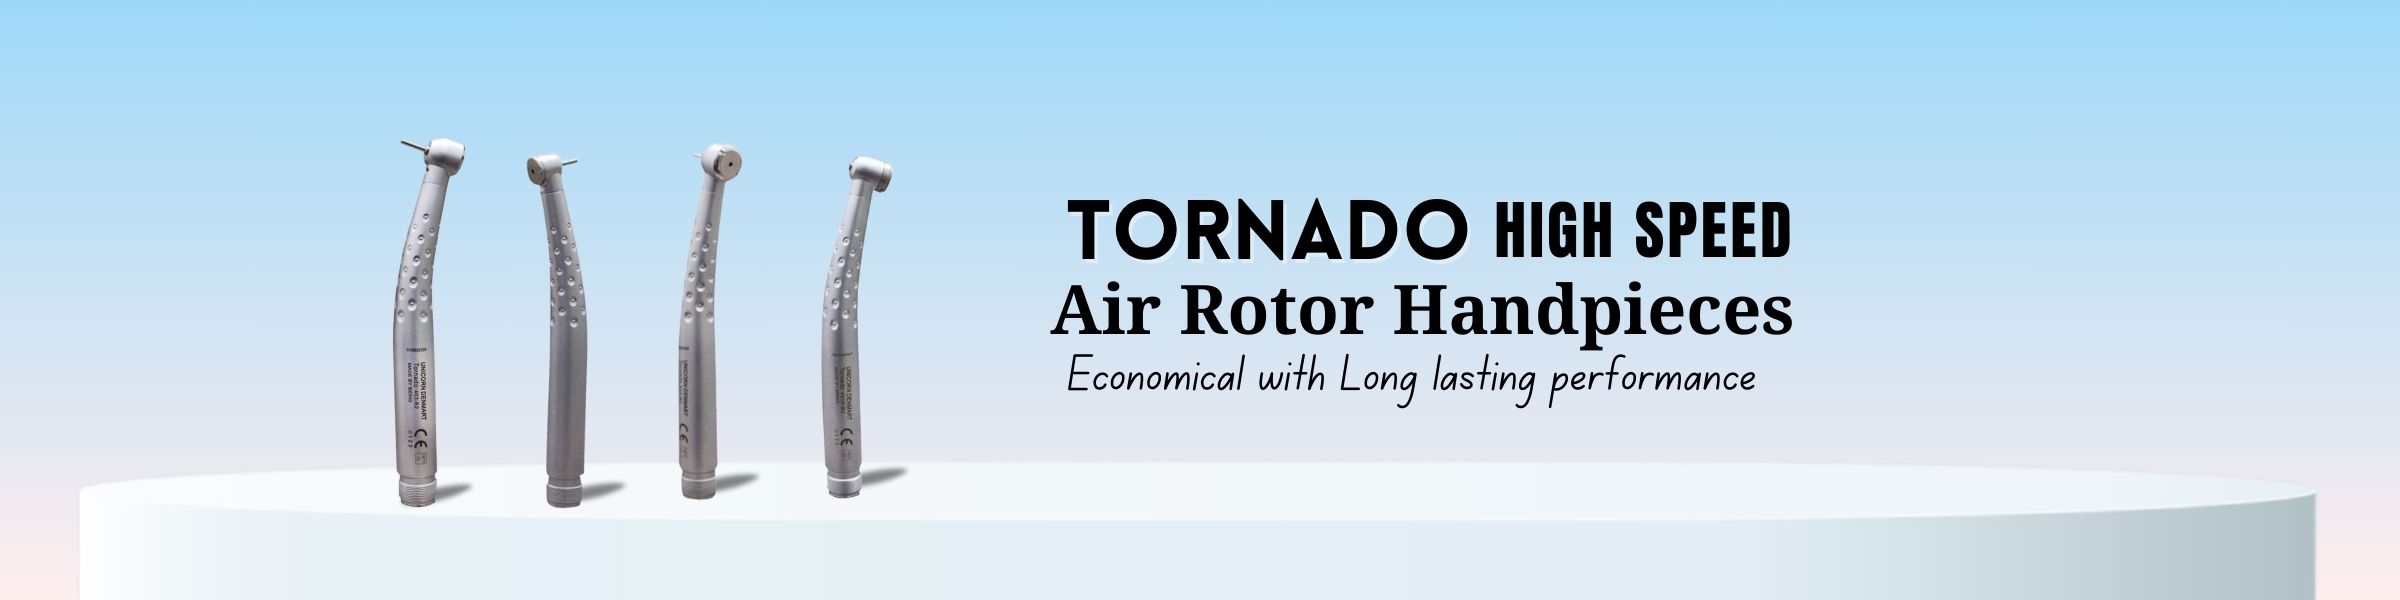 Tornado High Speed Air Rotor Handpieces